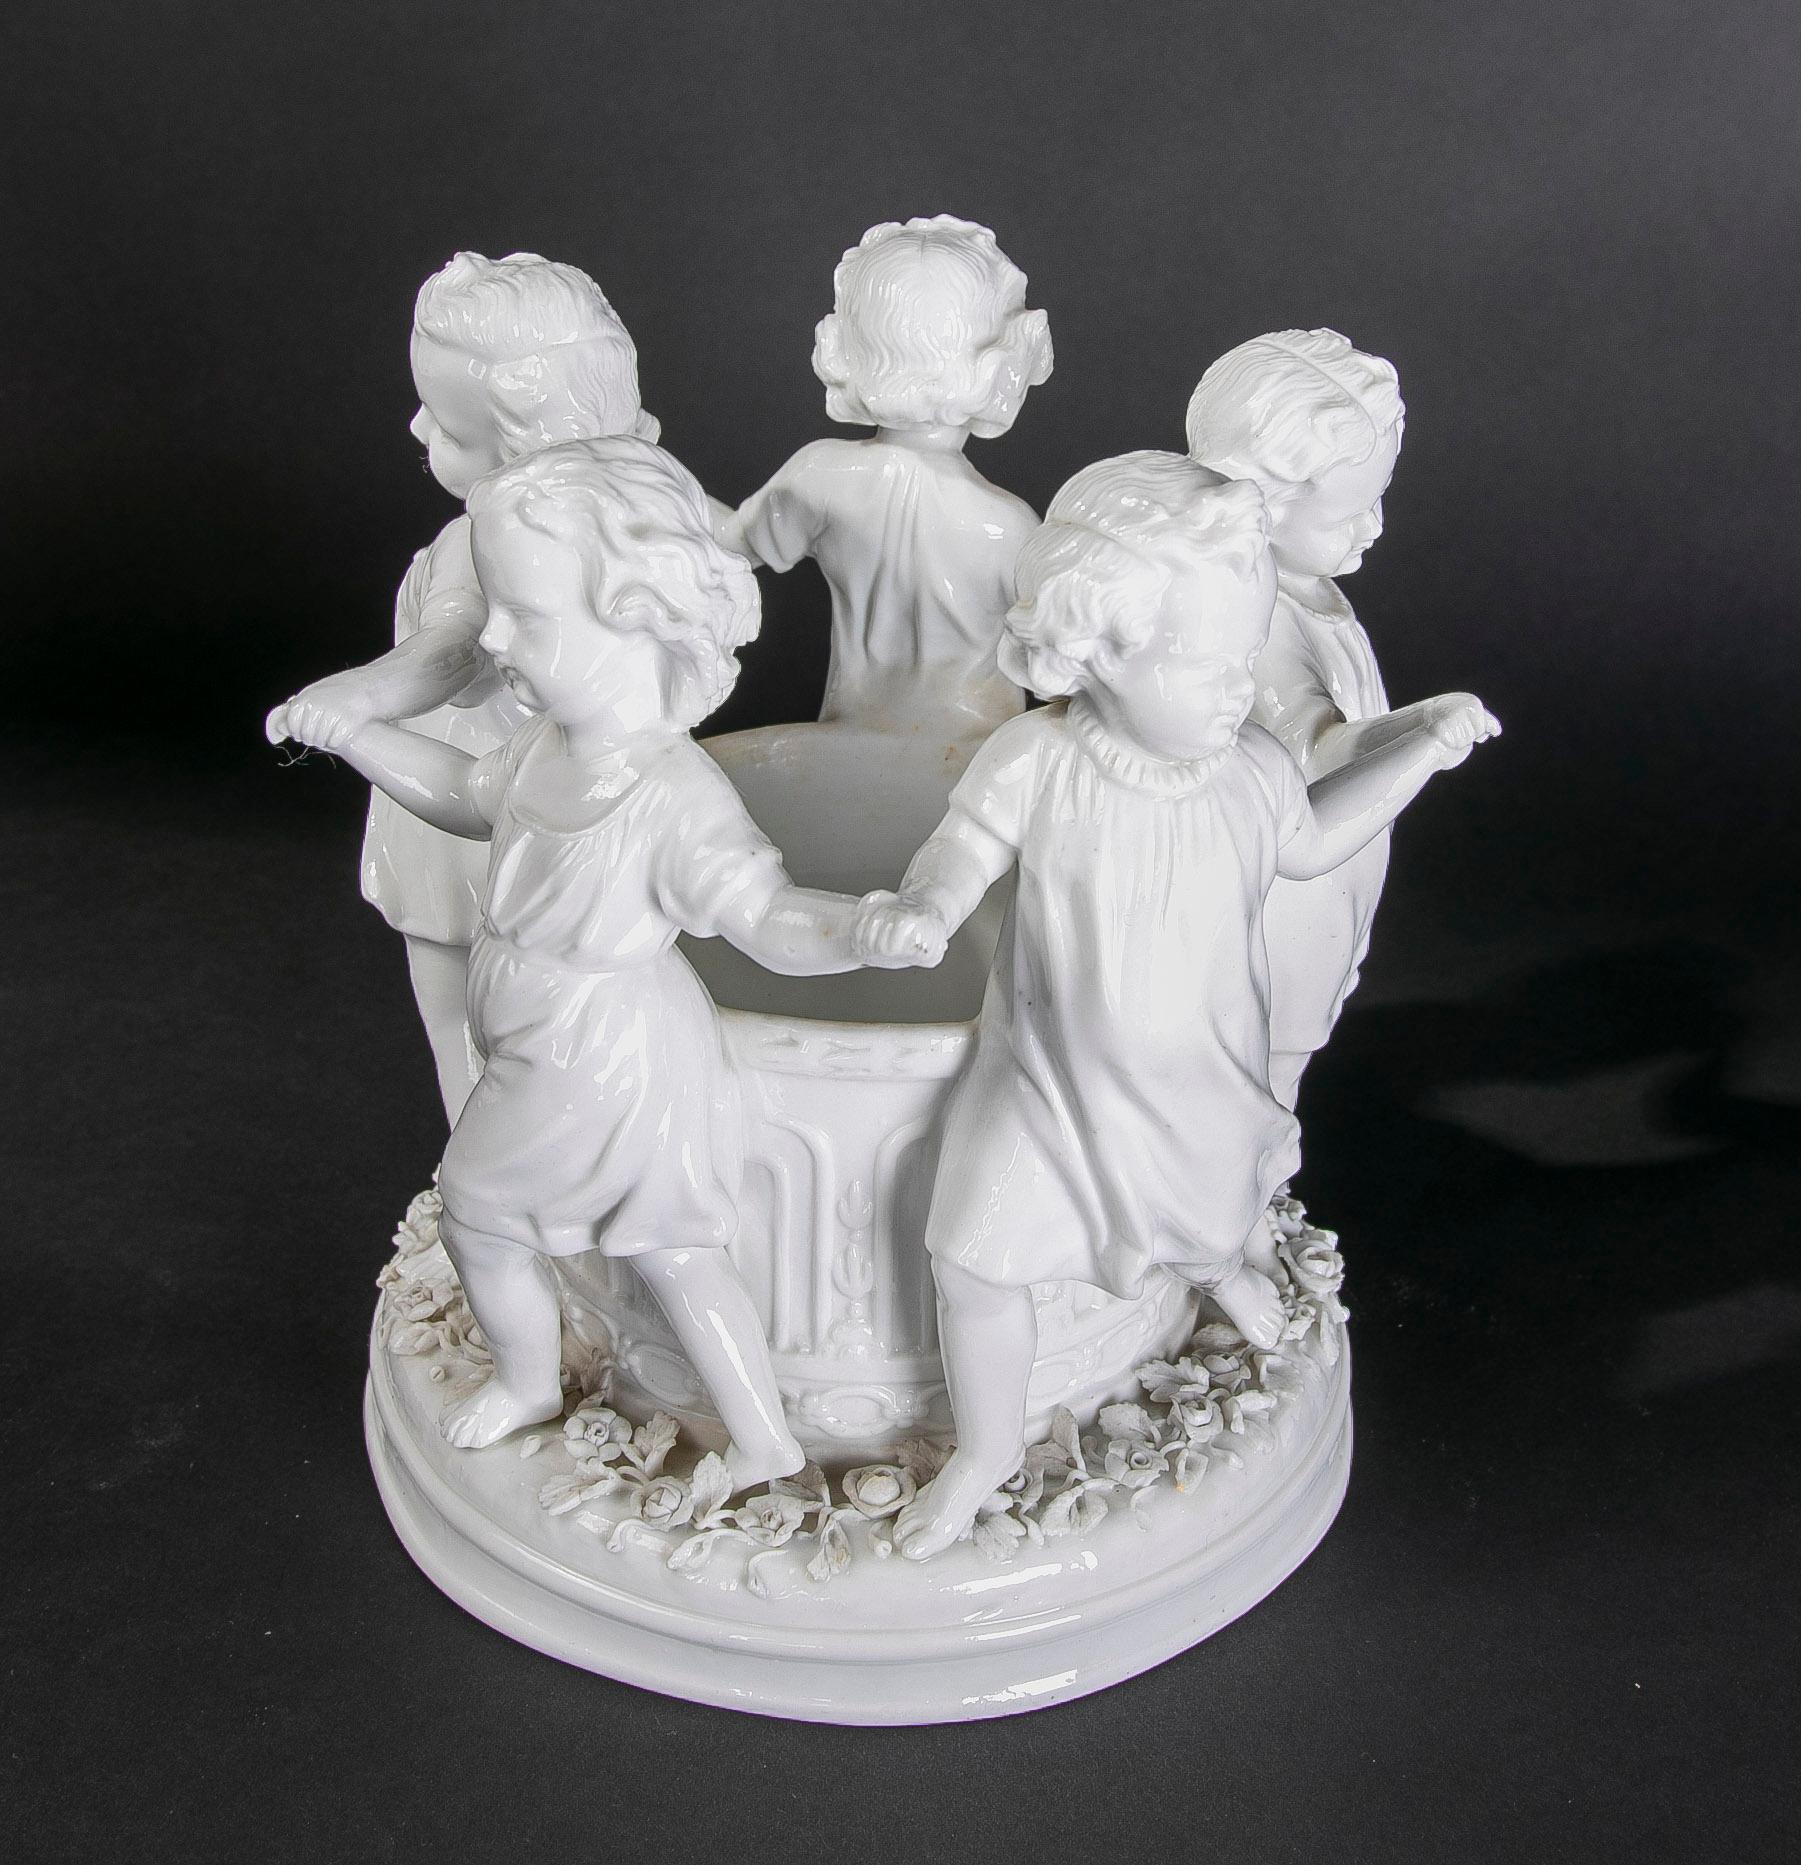 19th Century Austrian Porcelain Sculptural Set in White with Children.